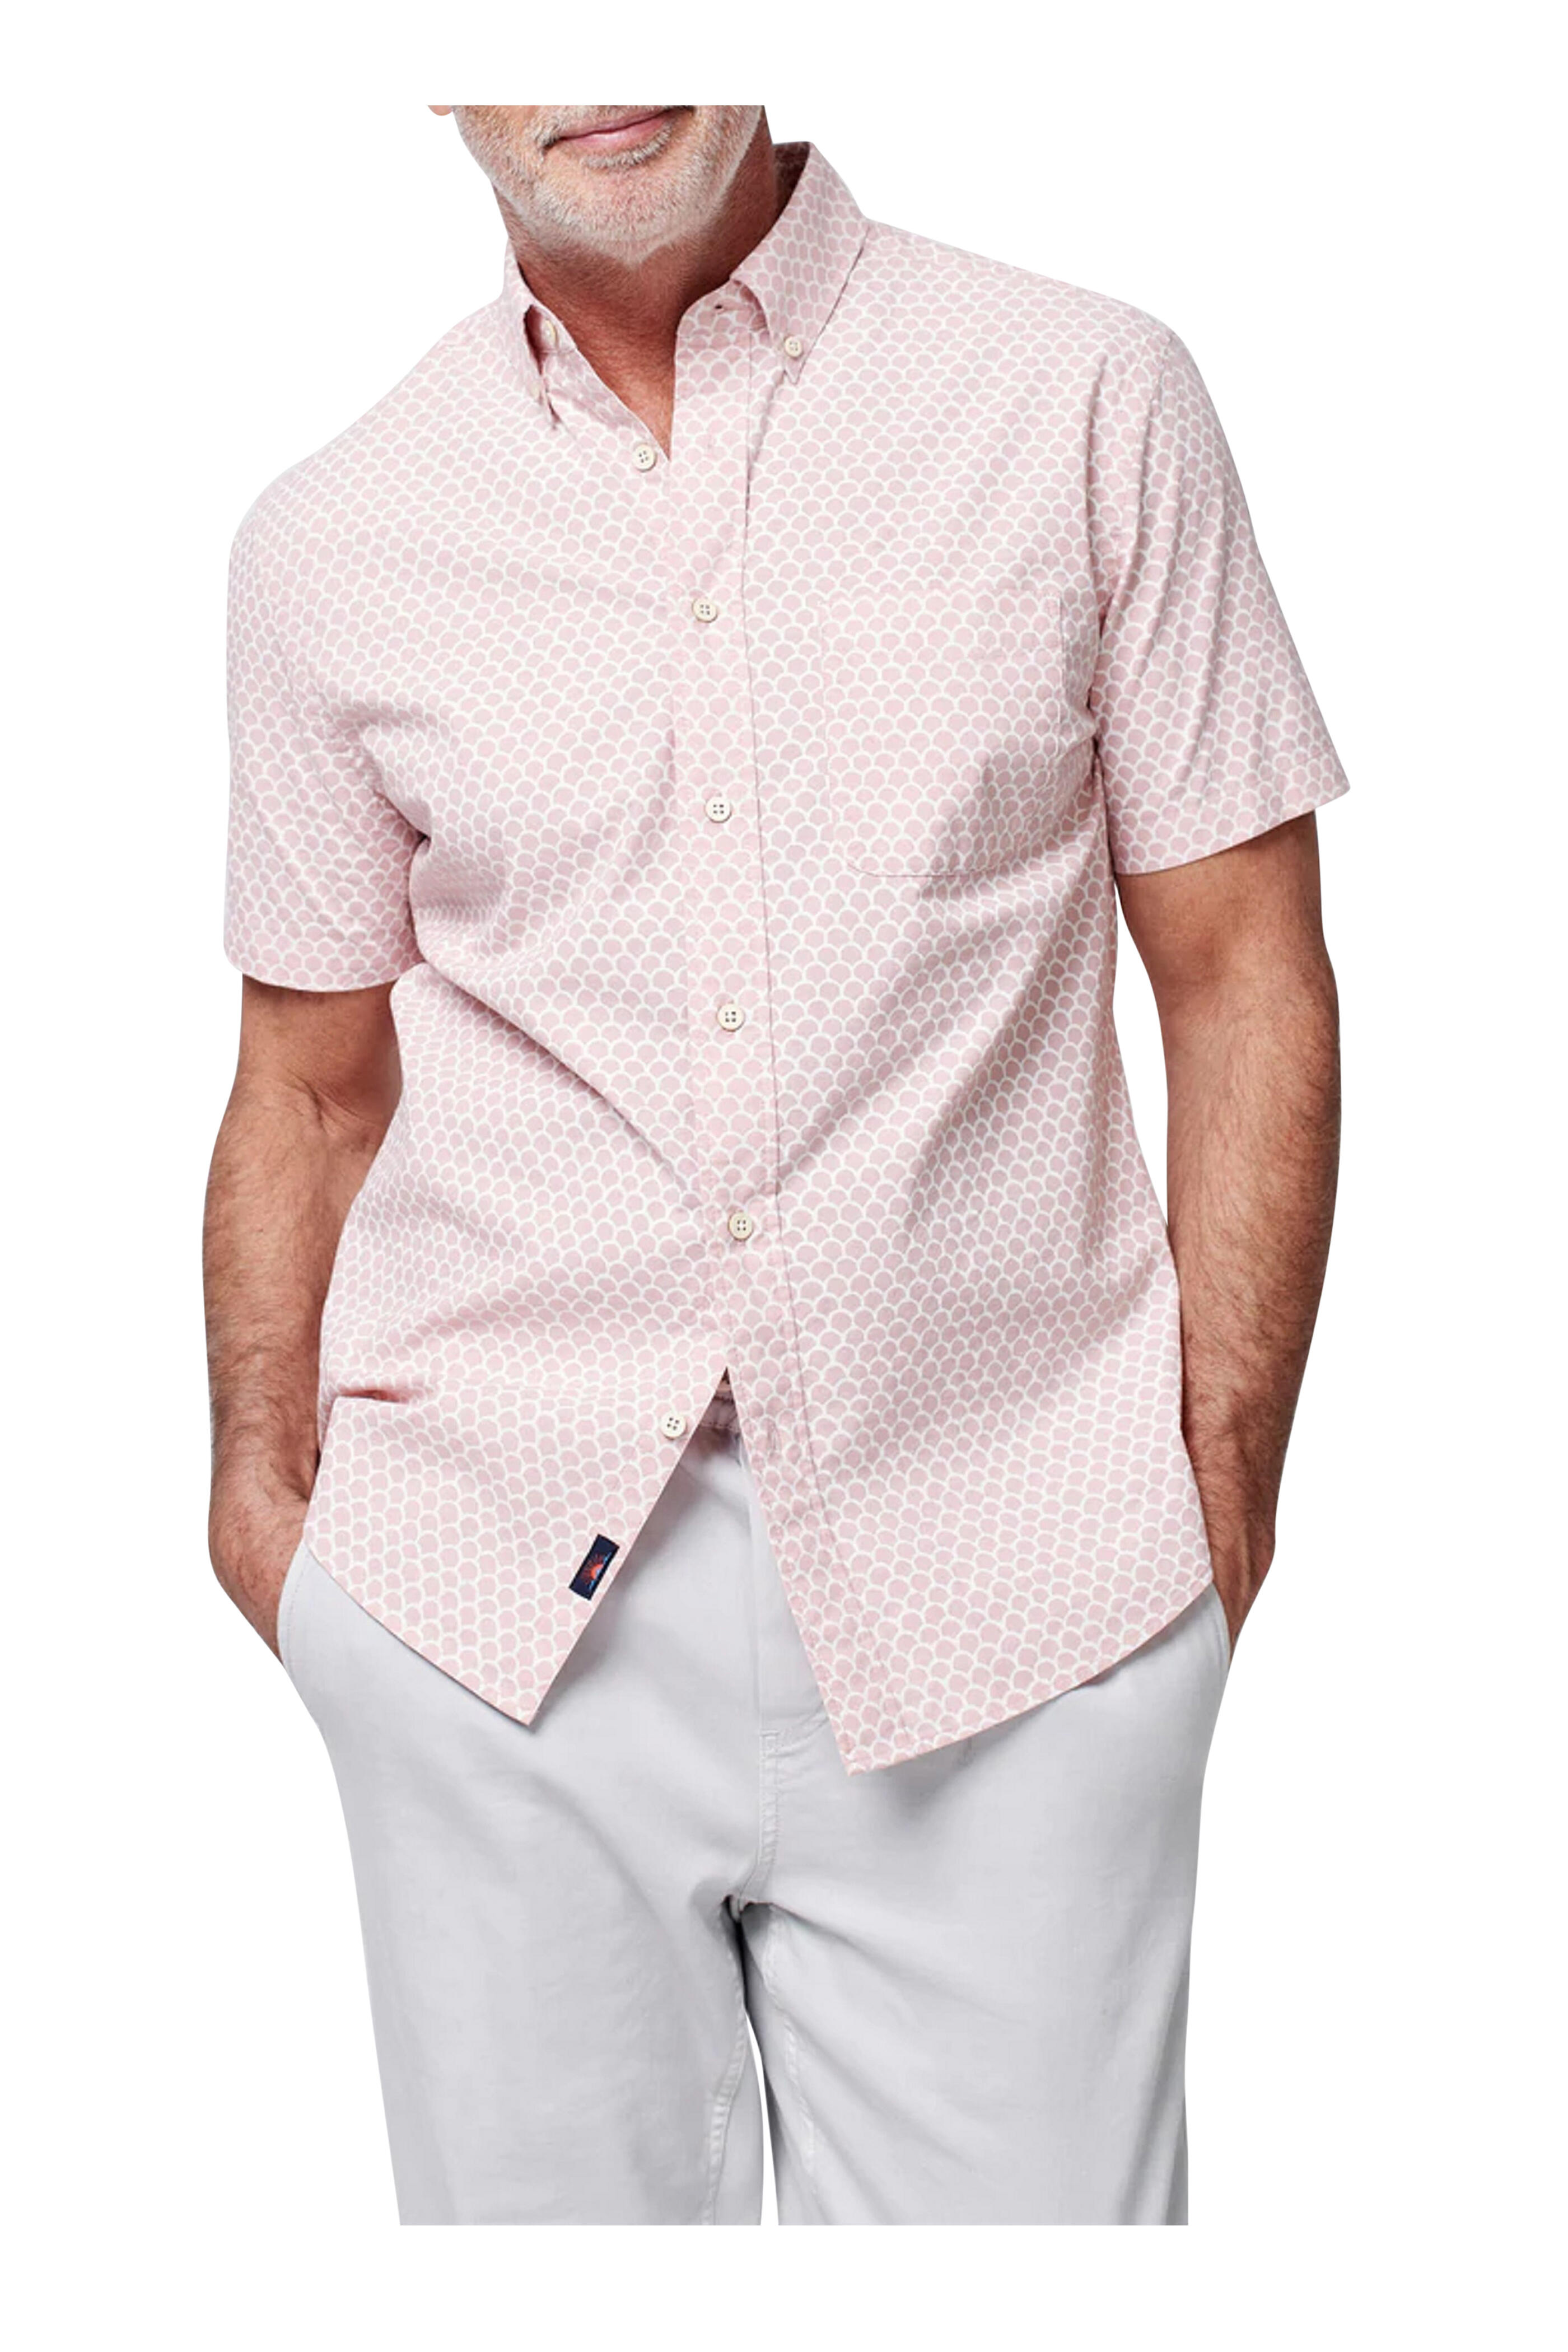 Faherty Brand - Playa Rose Fish Scale Short Sleeve Shirt